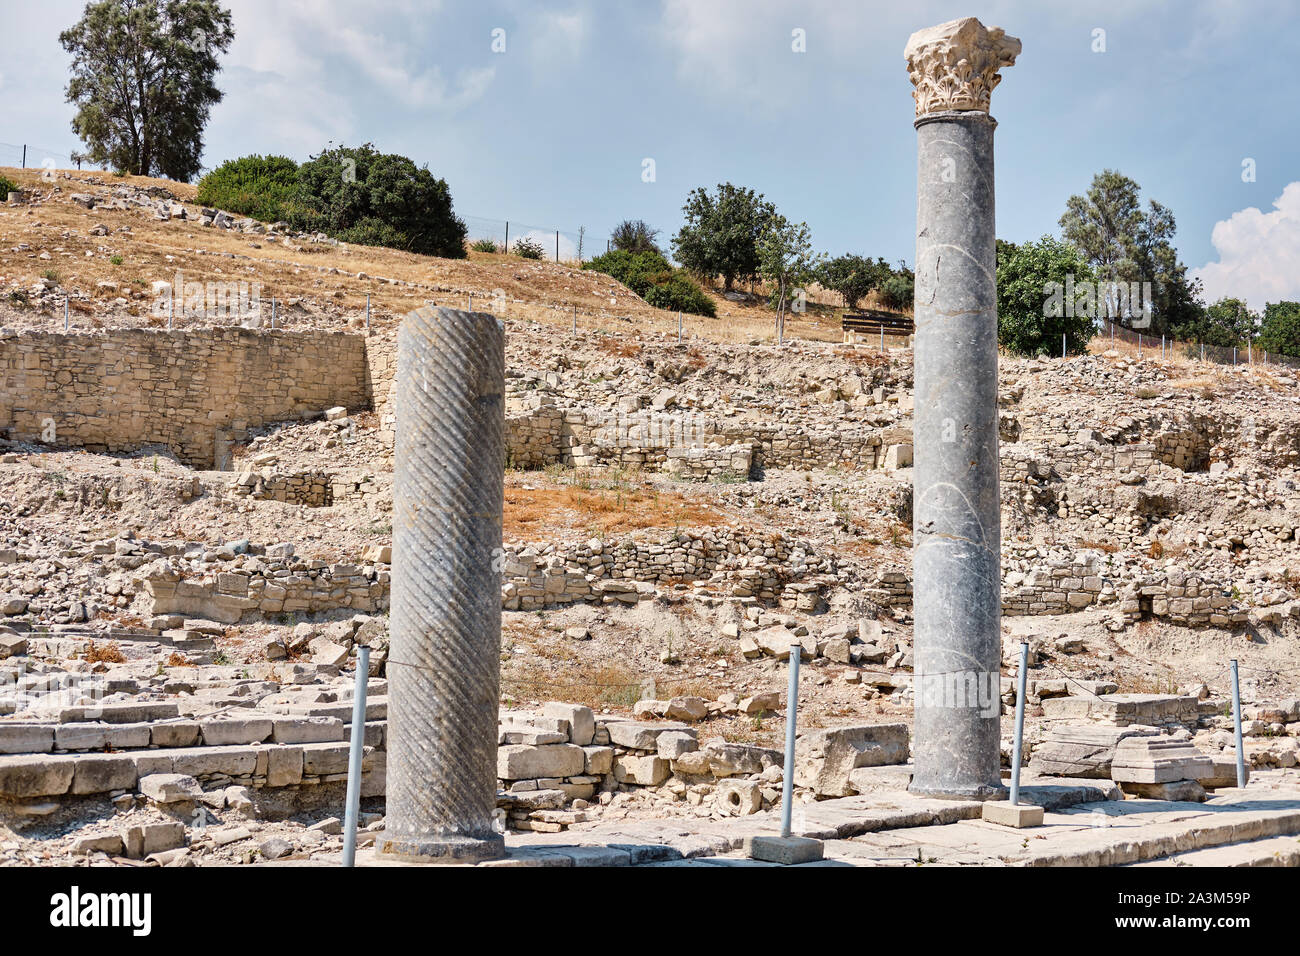 Ruins of Sanctuary of Apollo Hylates located at the beach of mediterranean sea. Near an ancient greek town of Kourion. Limassol, Episkopi, Cyprus. Stock Photo